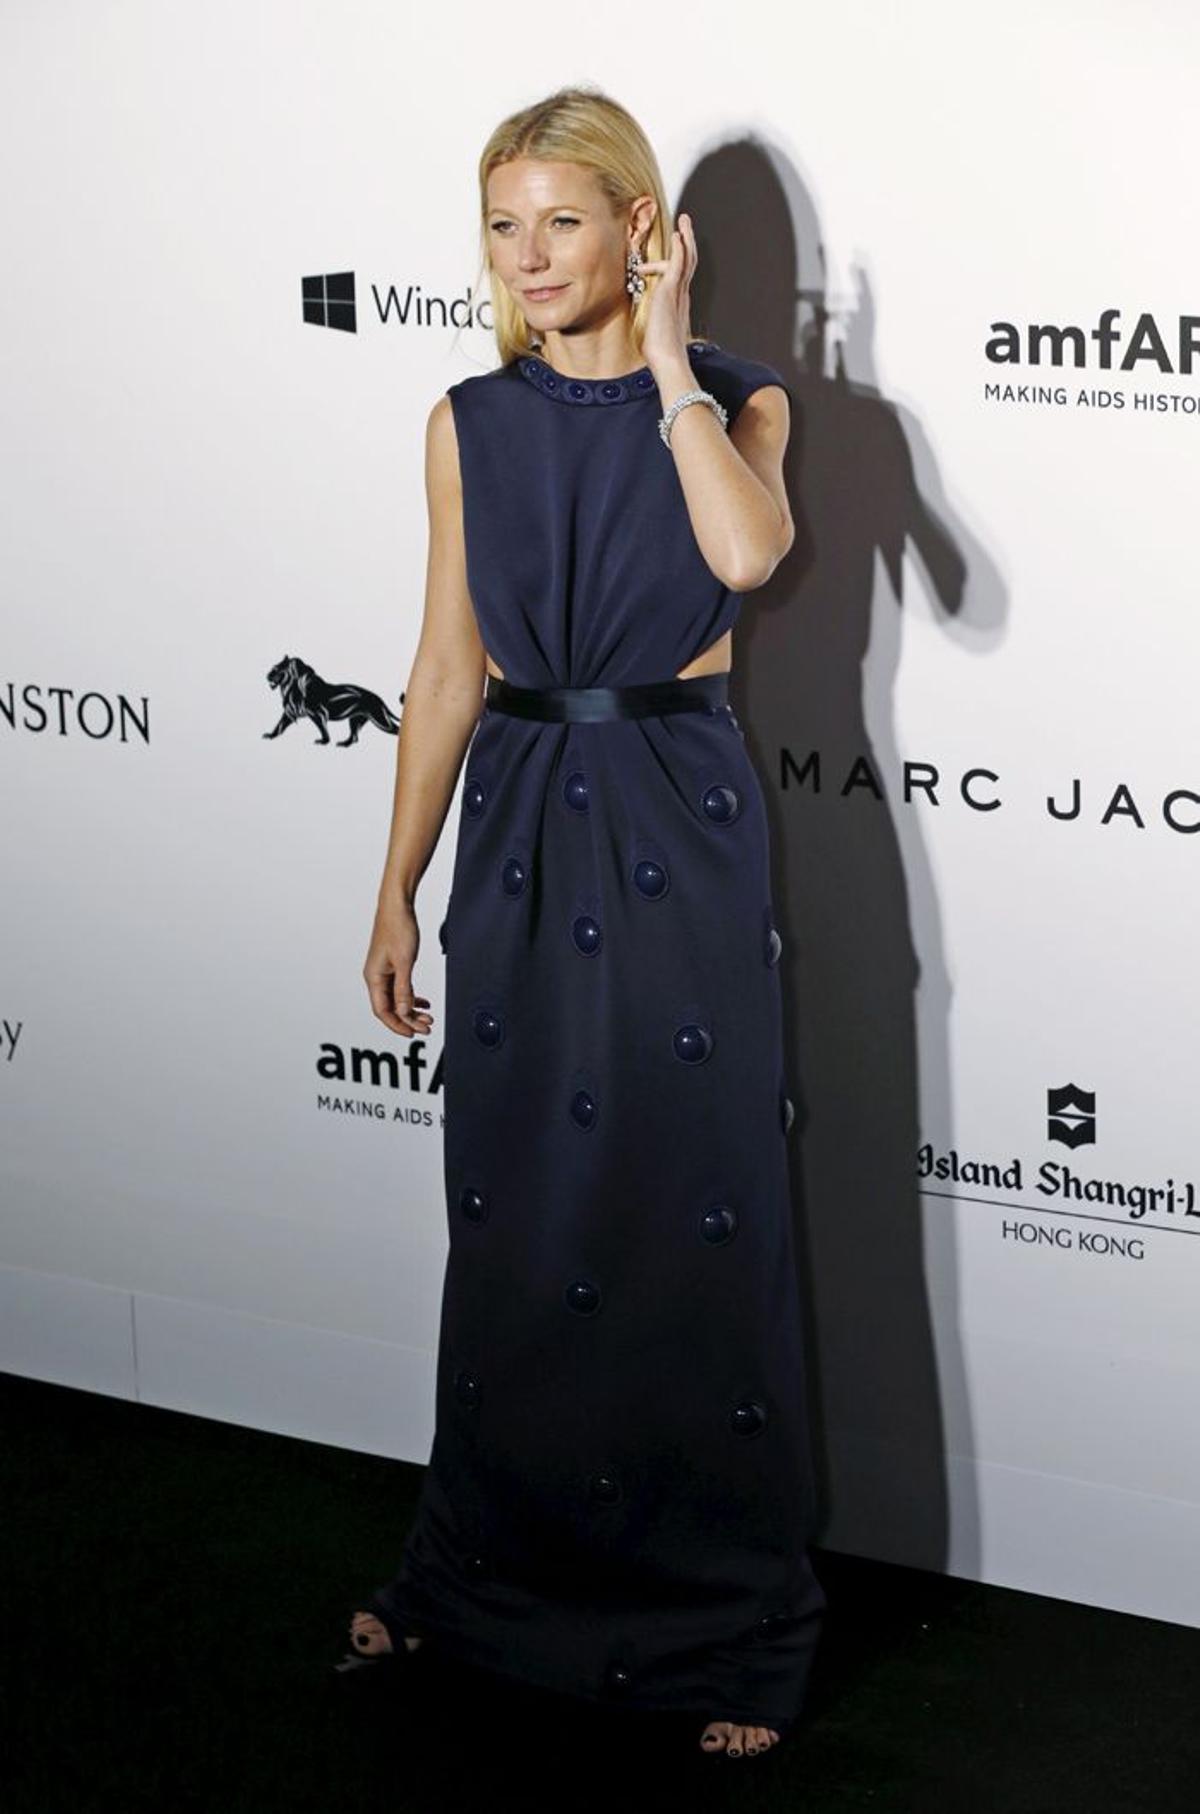 Gwyneth Paltrow en la gala amfAR en Hong Kong